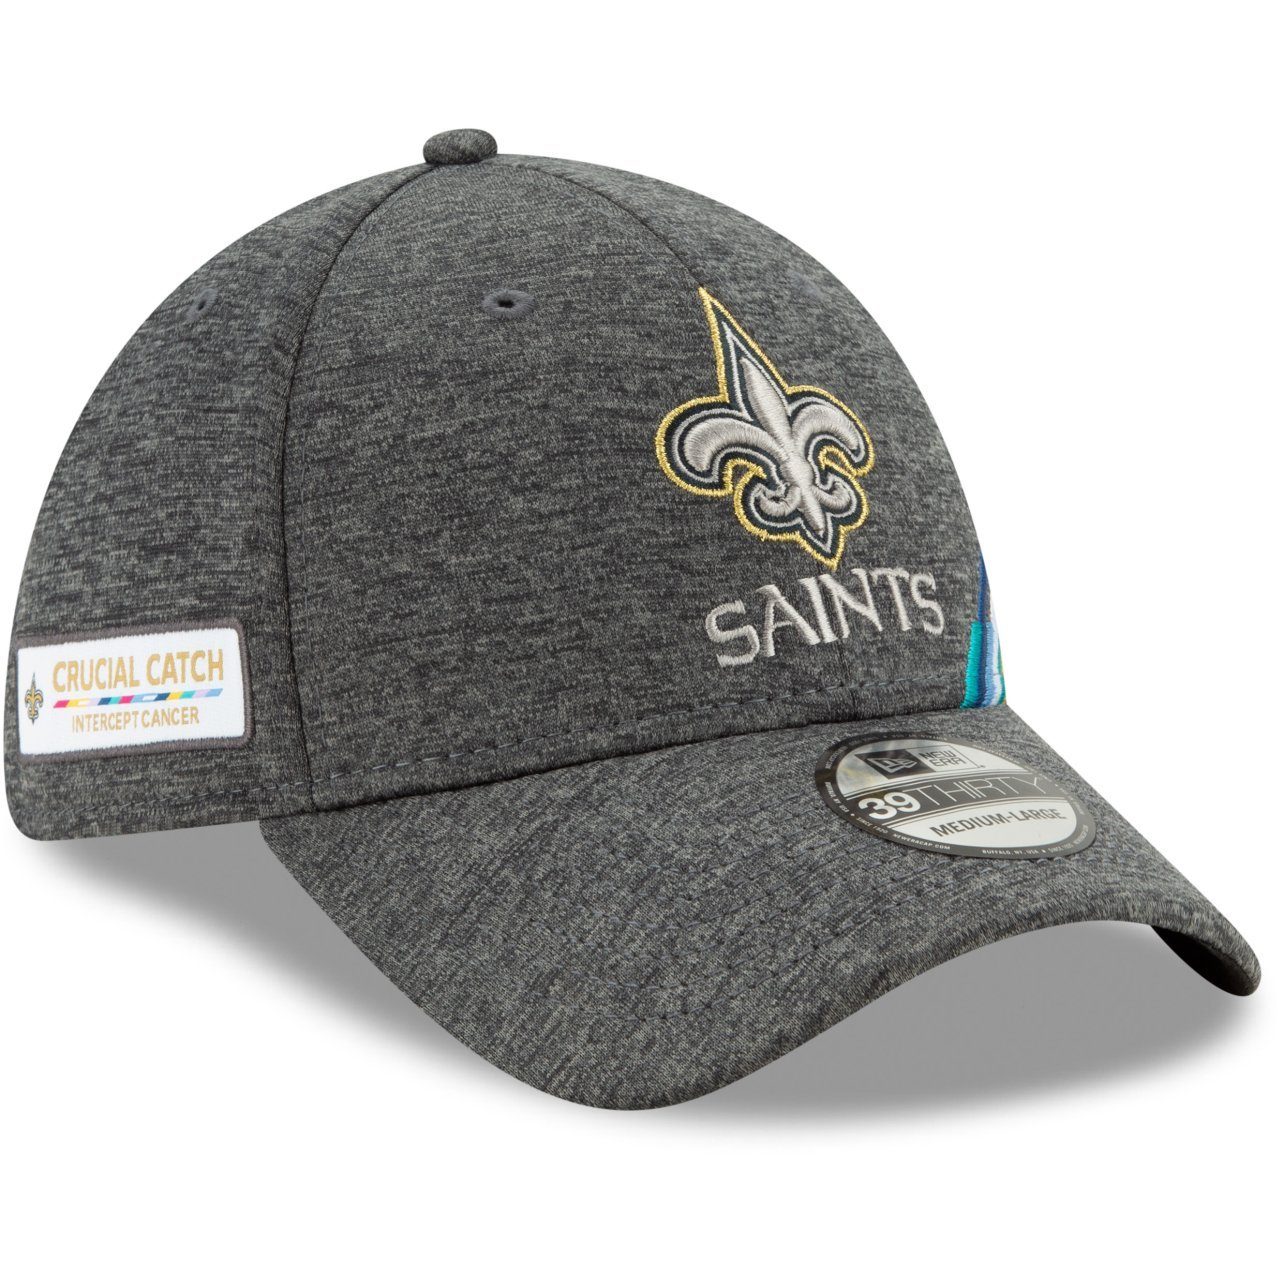 Cap New Era 39Thirty Saints New Teams CRUCIAL NFL Flex StretchFit CATCH Orleans